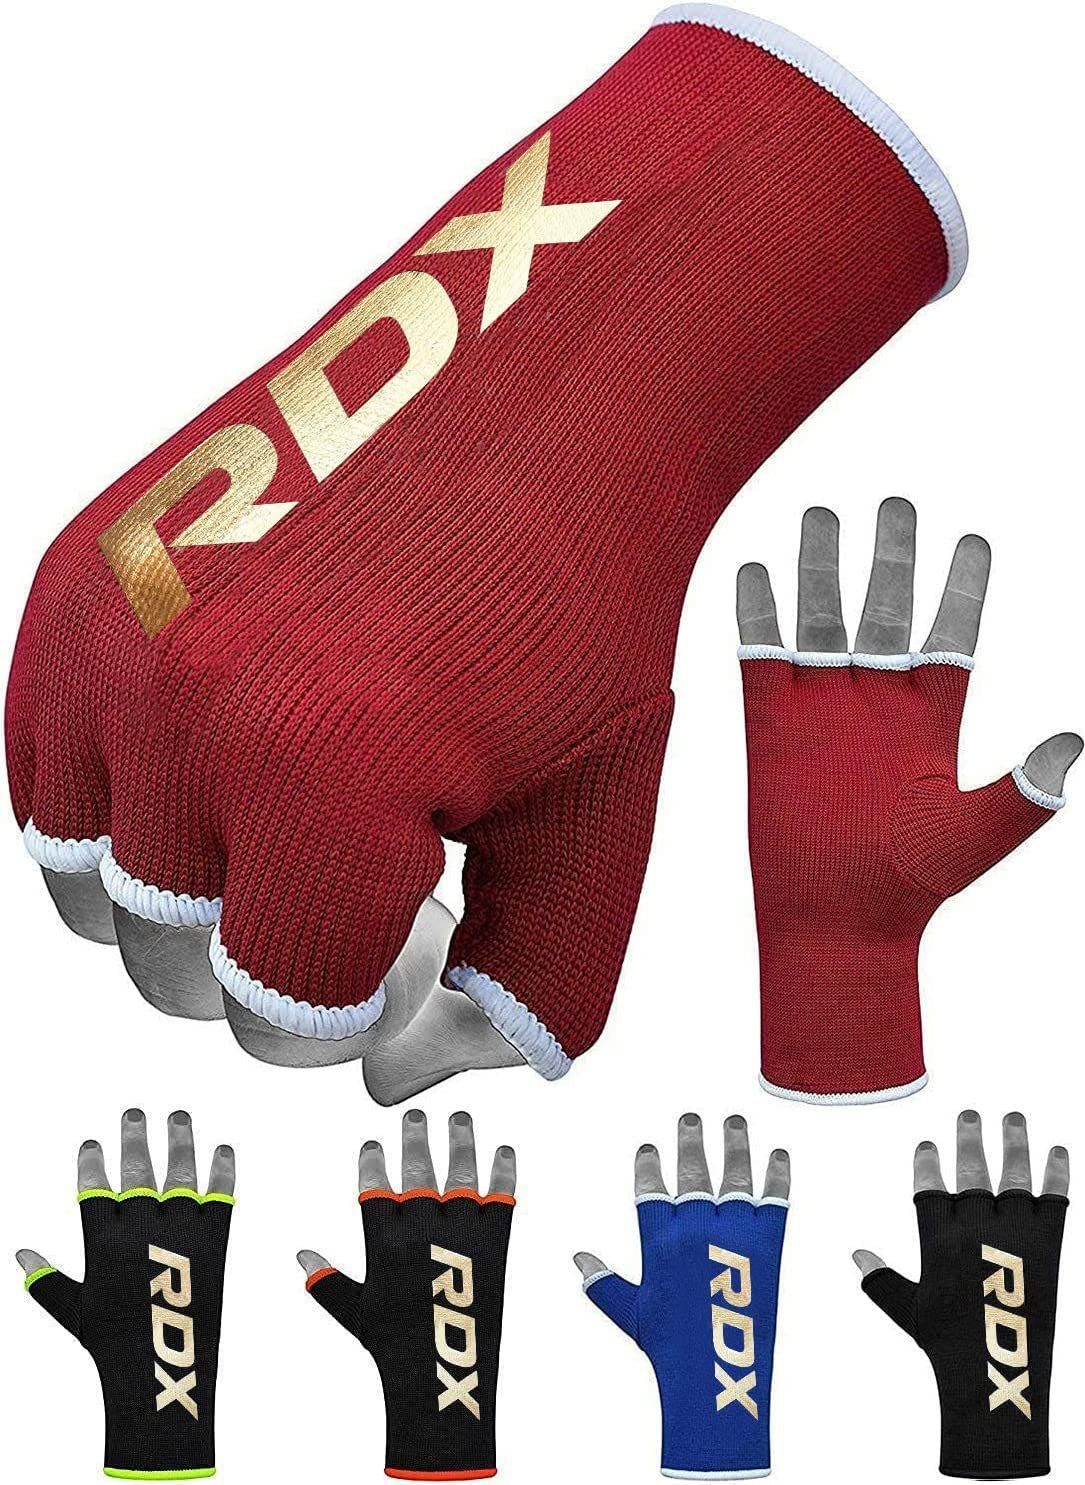 RDX Sports Boxbandagen RDX Innere Handschuhe Boxen Training, Boxbandagen Sparring Hand Wraps RED